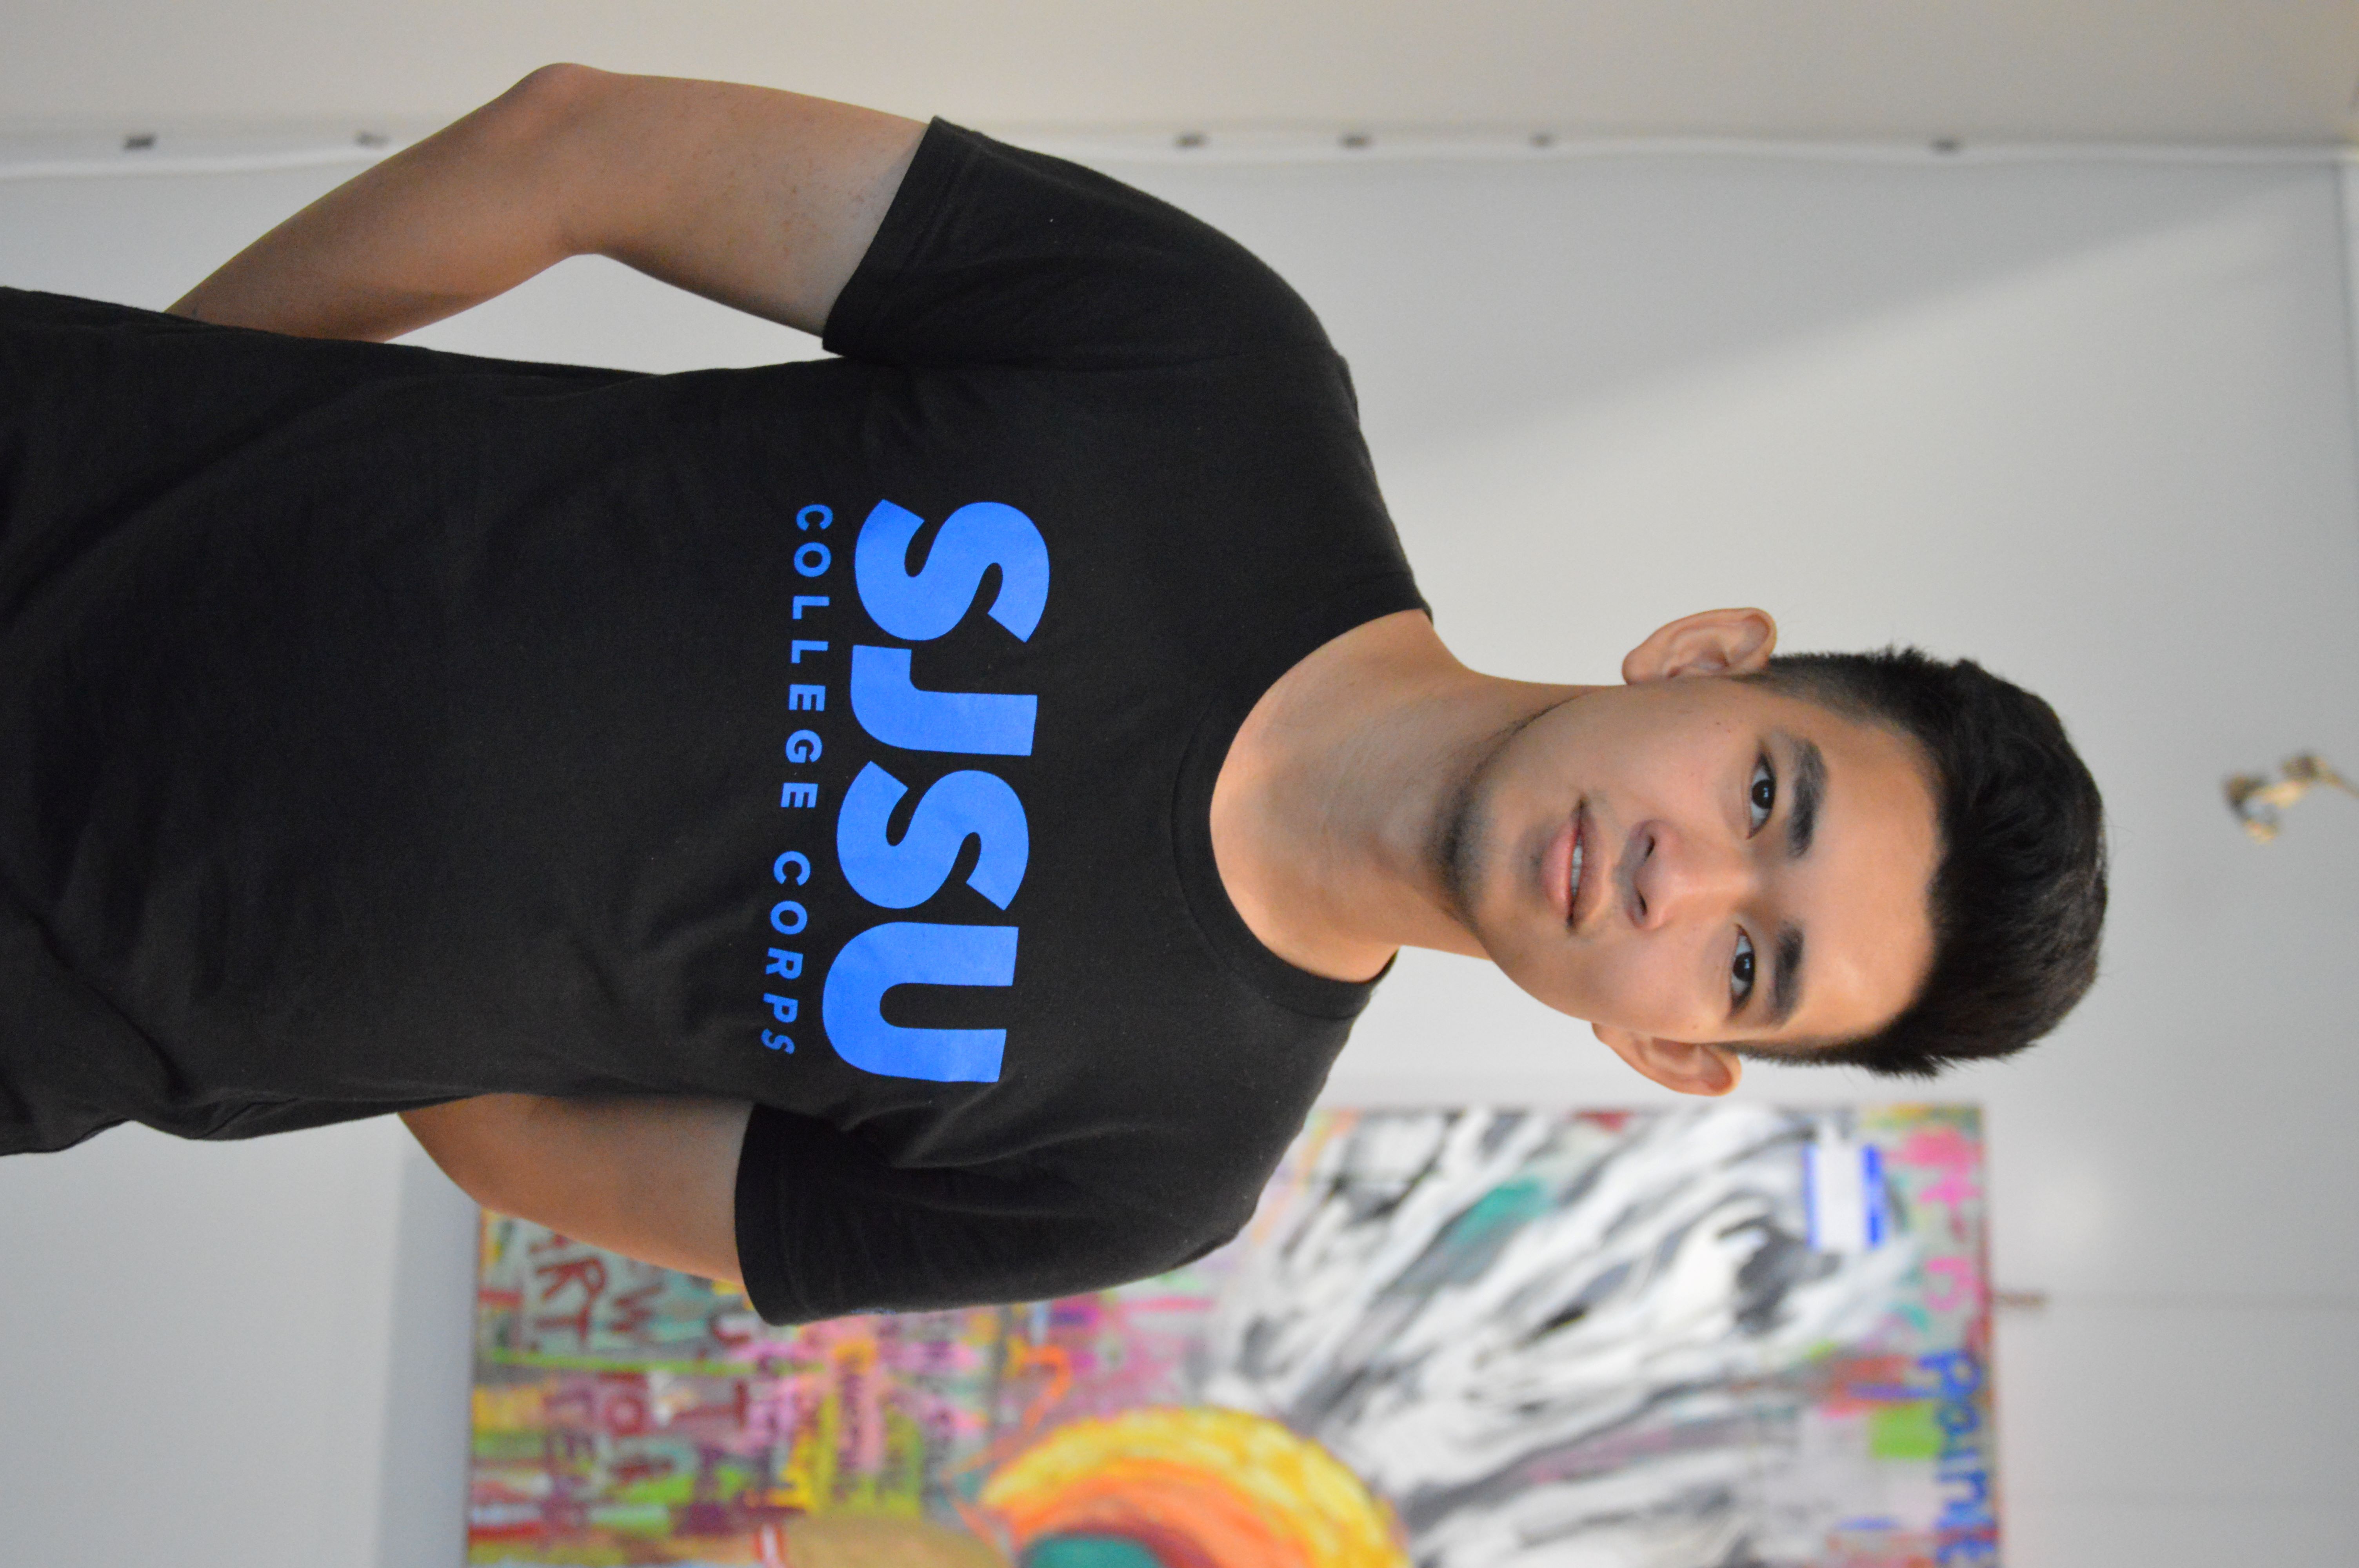 Tristan Nhan in black CC shirt